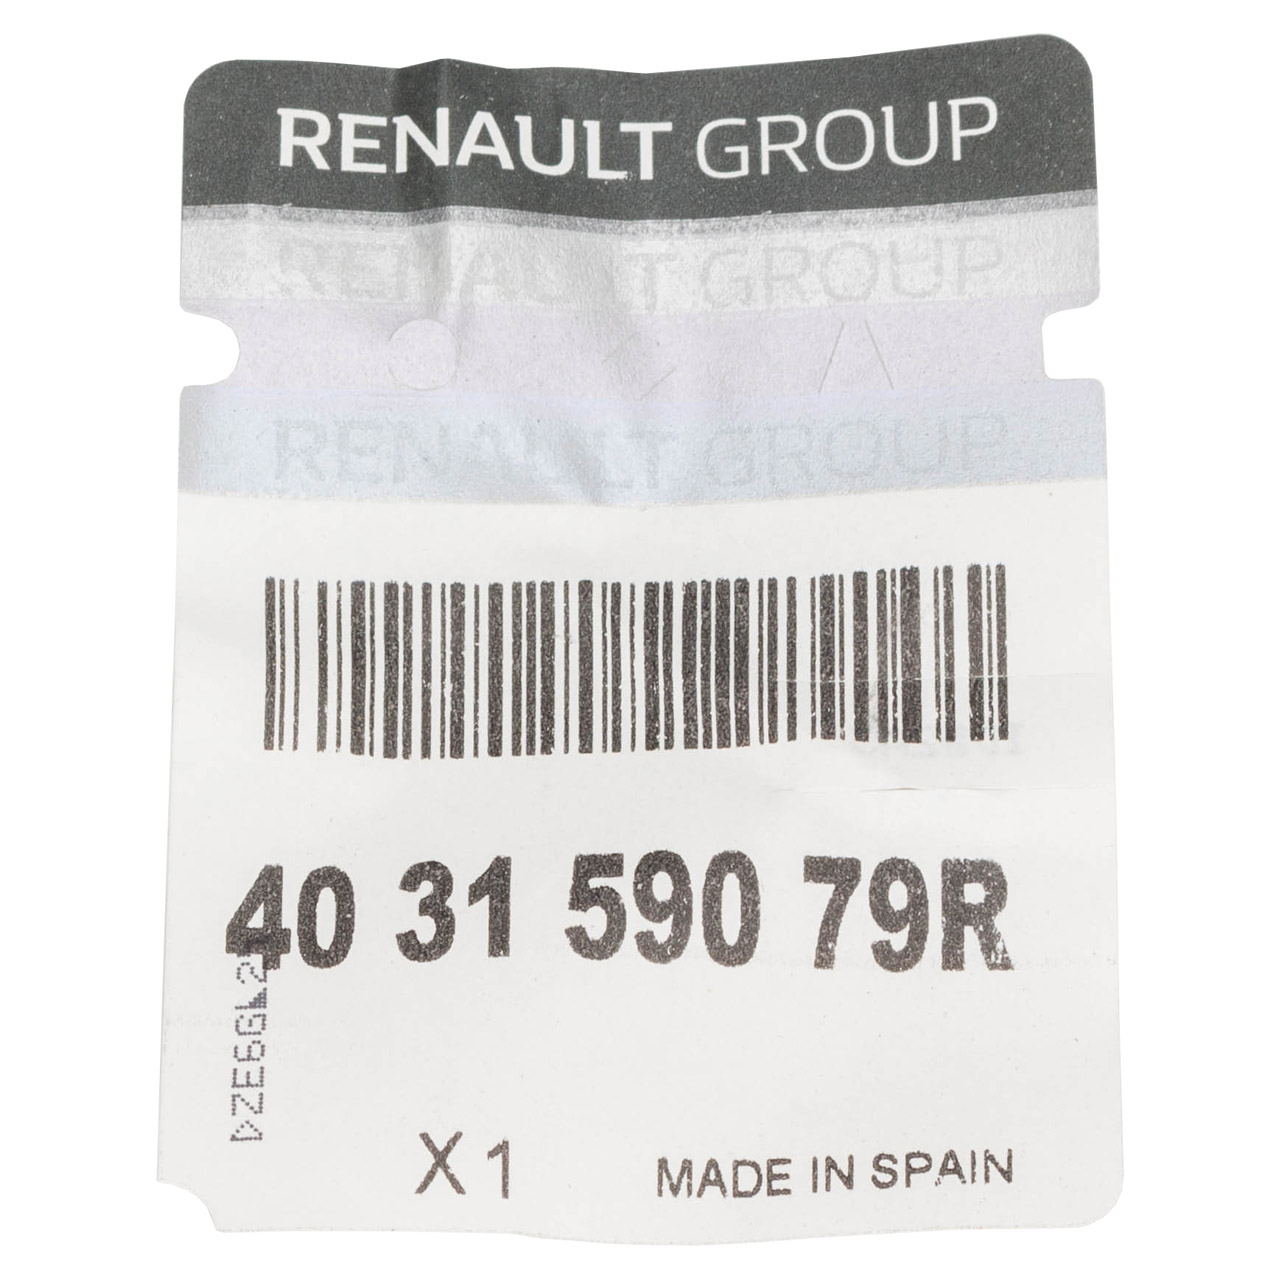 1x ORIGINAL Renault Radkappe Radblende 17 Zoll Silber Captur 2 403159079R